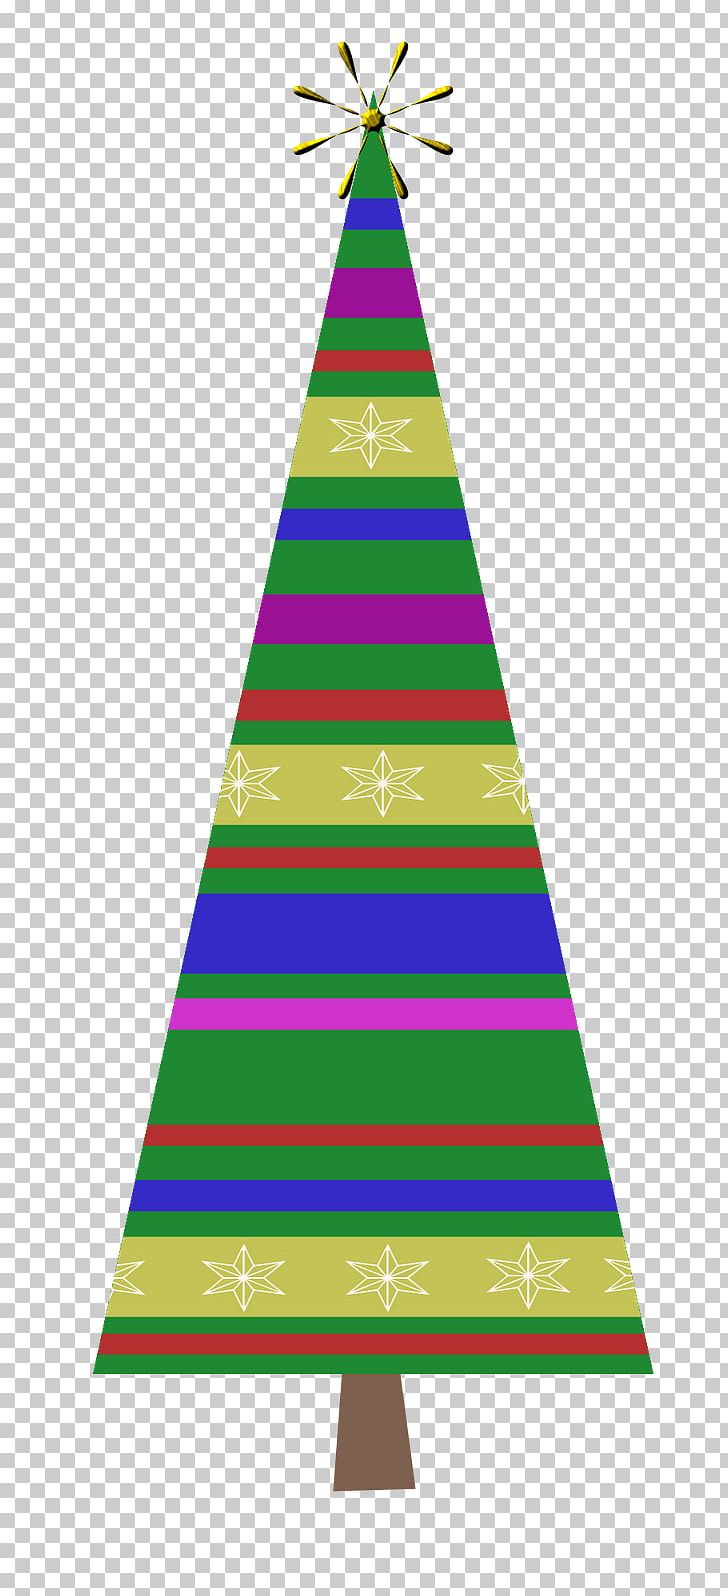 Christmas Tree Christmas Ornament Christmas Day Fir Triangle PNG, Clipart, Christmas, Christmas Day, Christmas Decoration, Christmas Ornament, Christmas Tree Free PNG Download